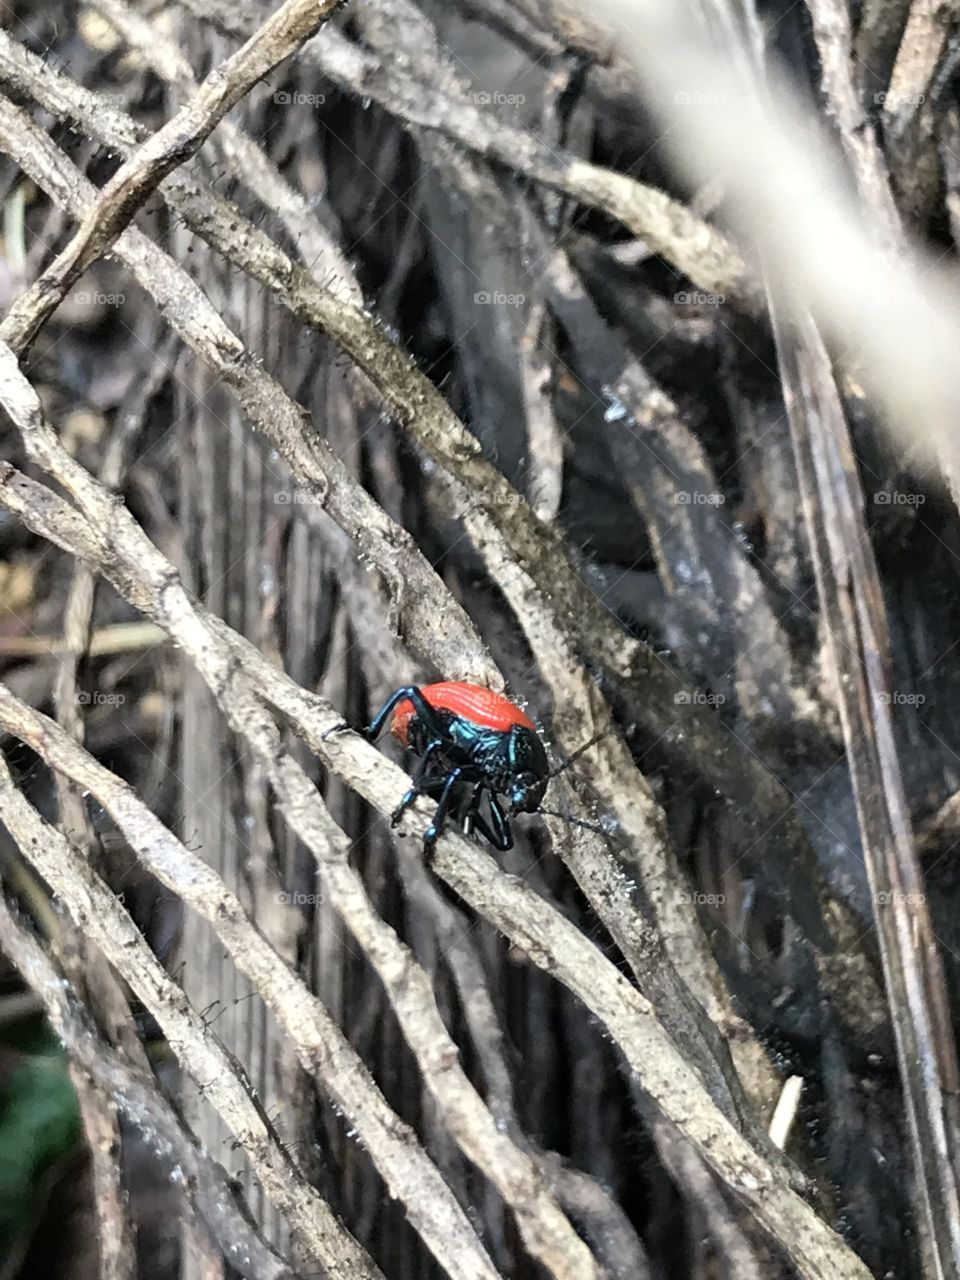 It’s a ladybug 